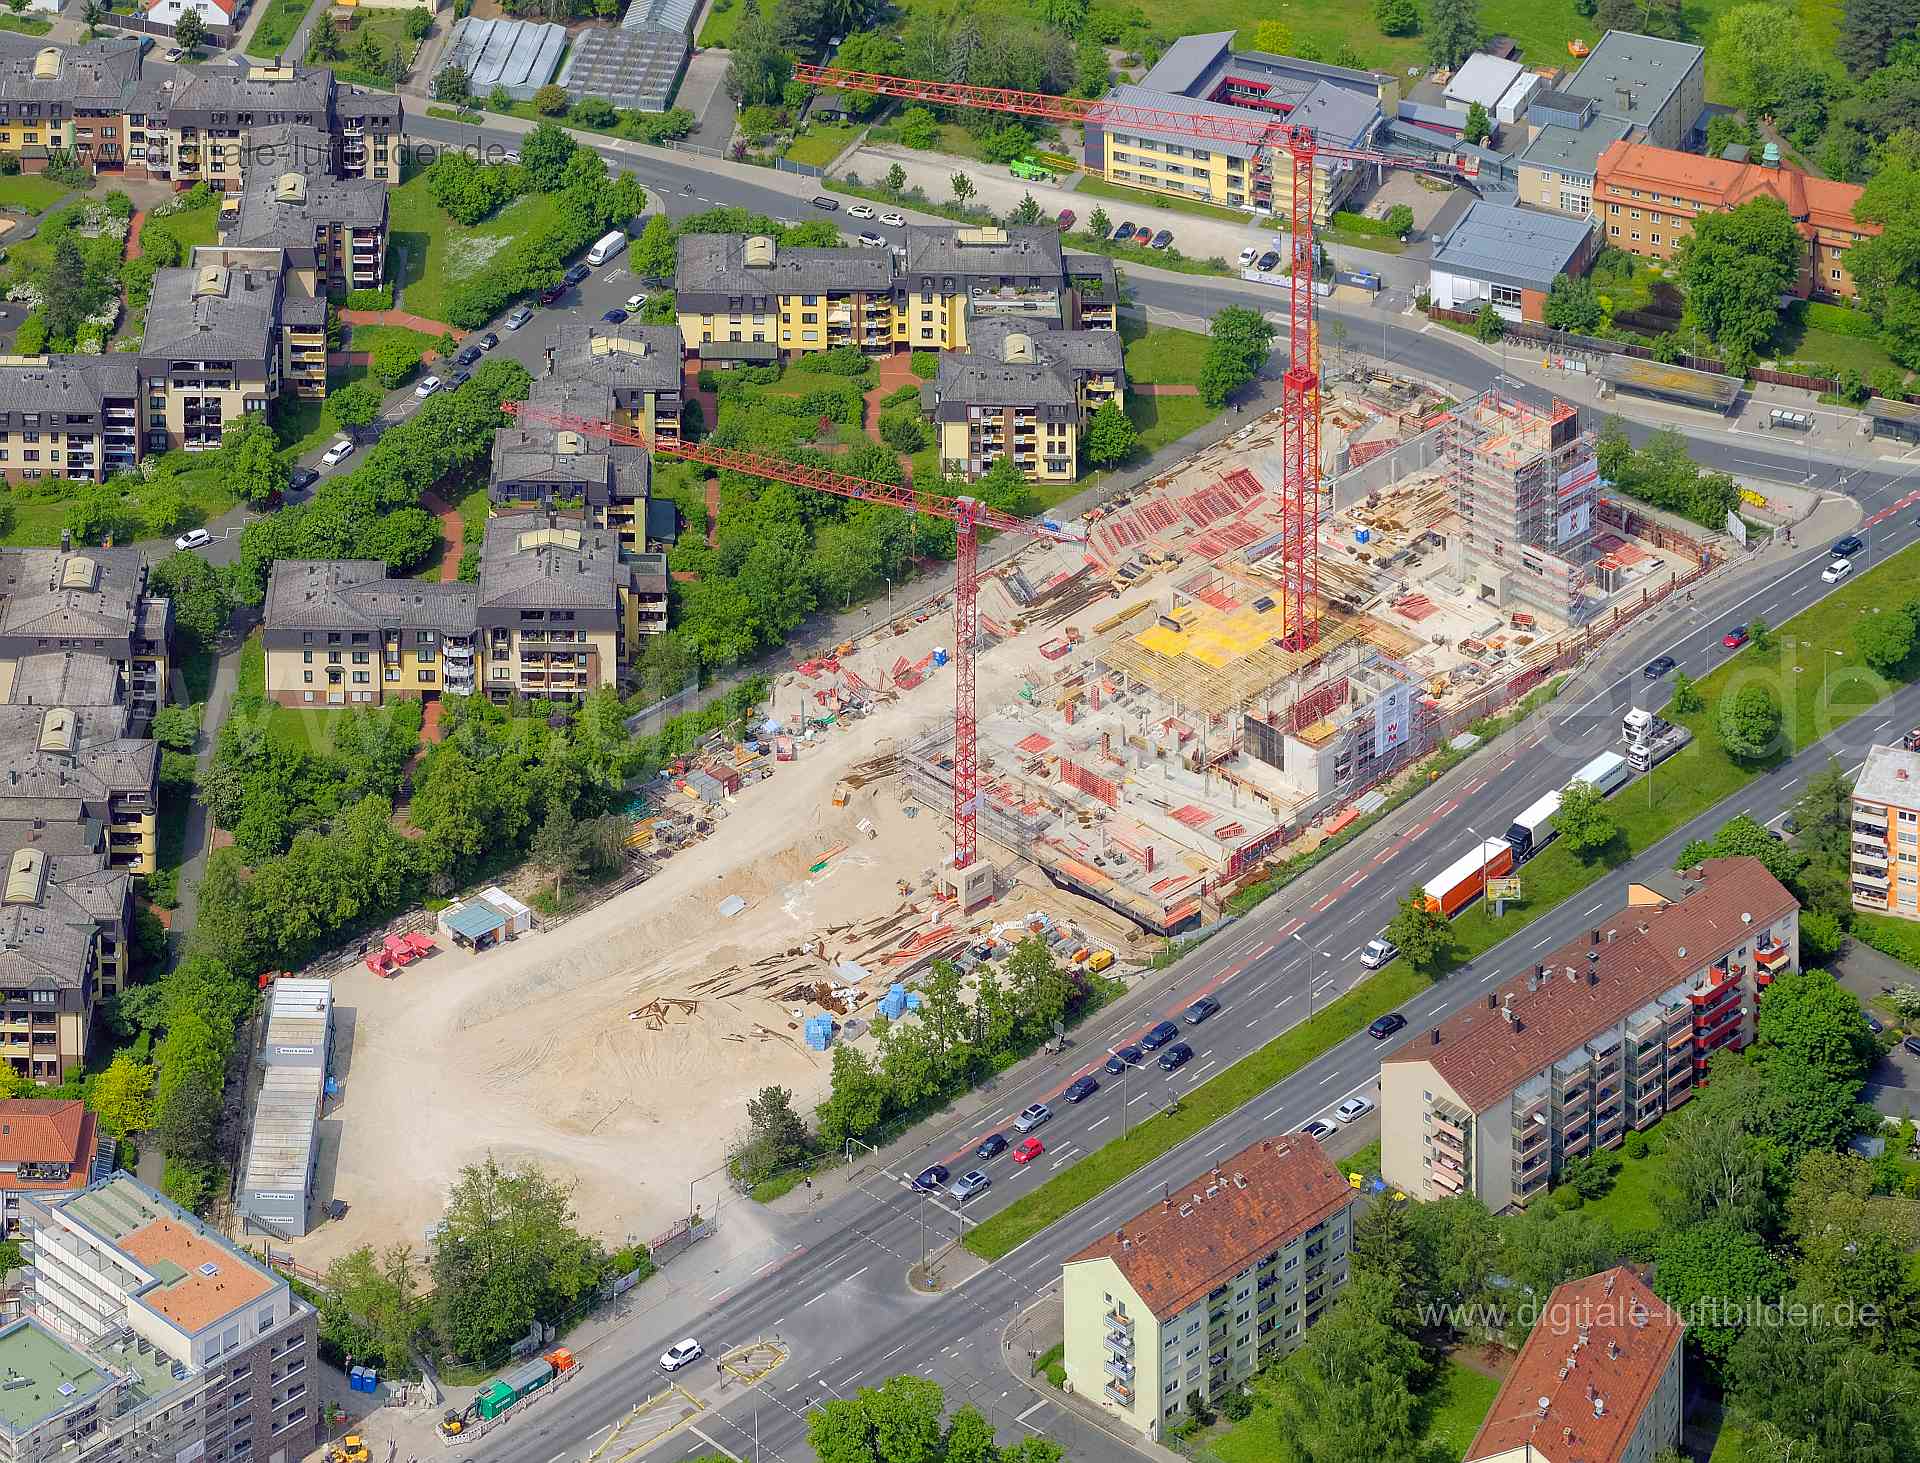 Luftbild - Umweltbank (Baustelle), Ort: Nürnberg, Tags: Umweltbank, Baustelle, Großbaustelle, Flora 54, Schultheiß, Kran, ...